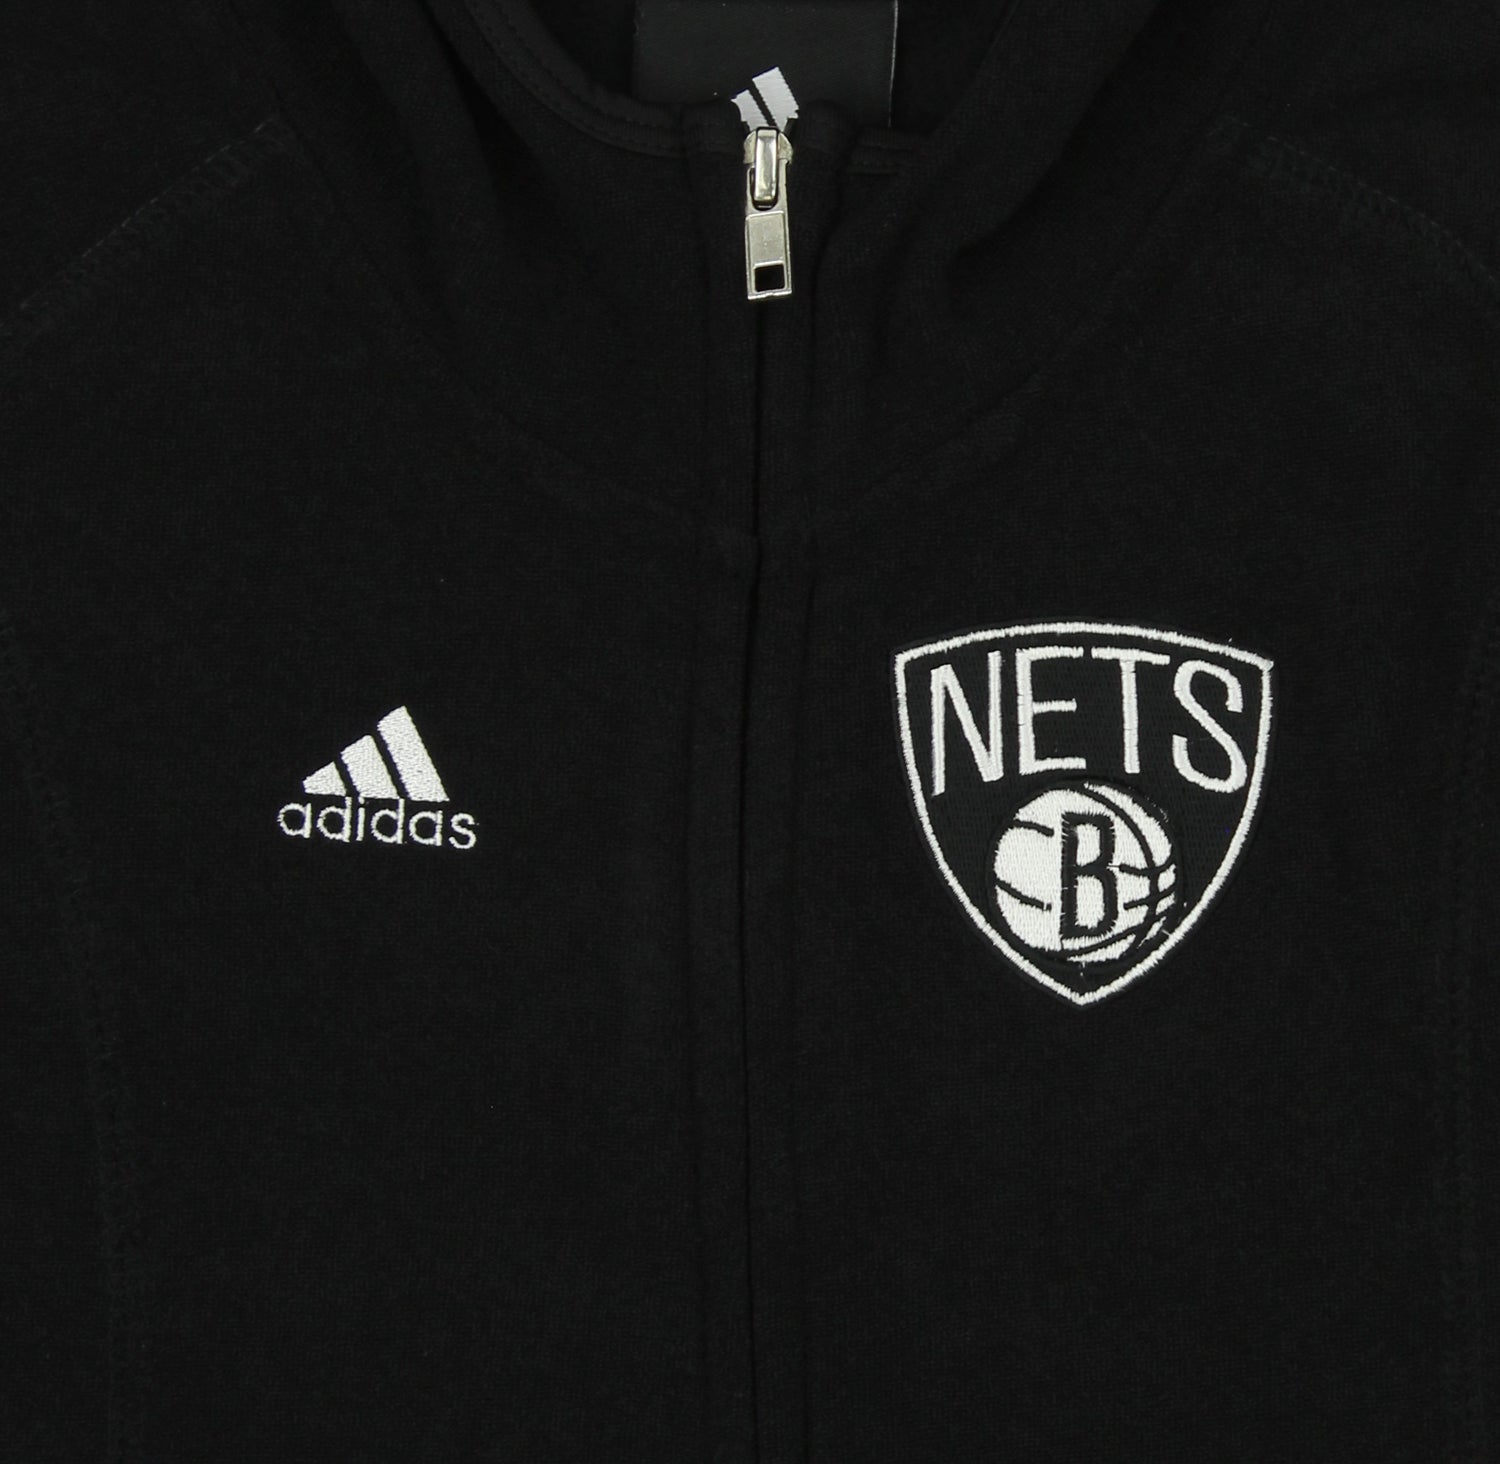 Adidas Originals NBA Brooklyn Nets Baseball Jersey Mens S